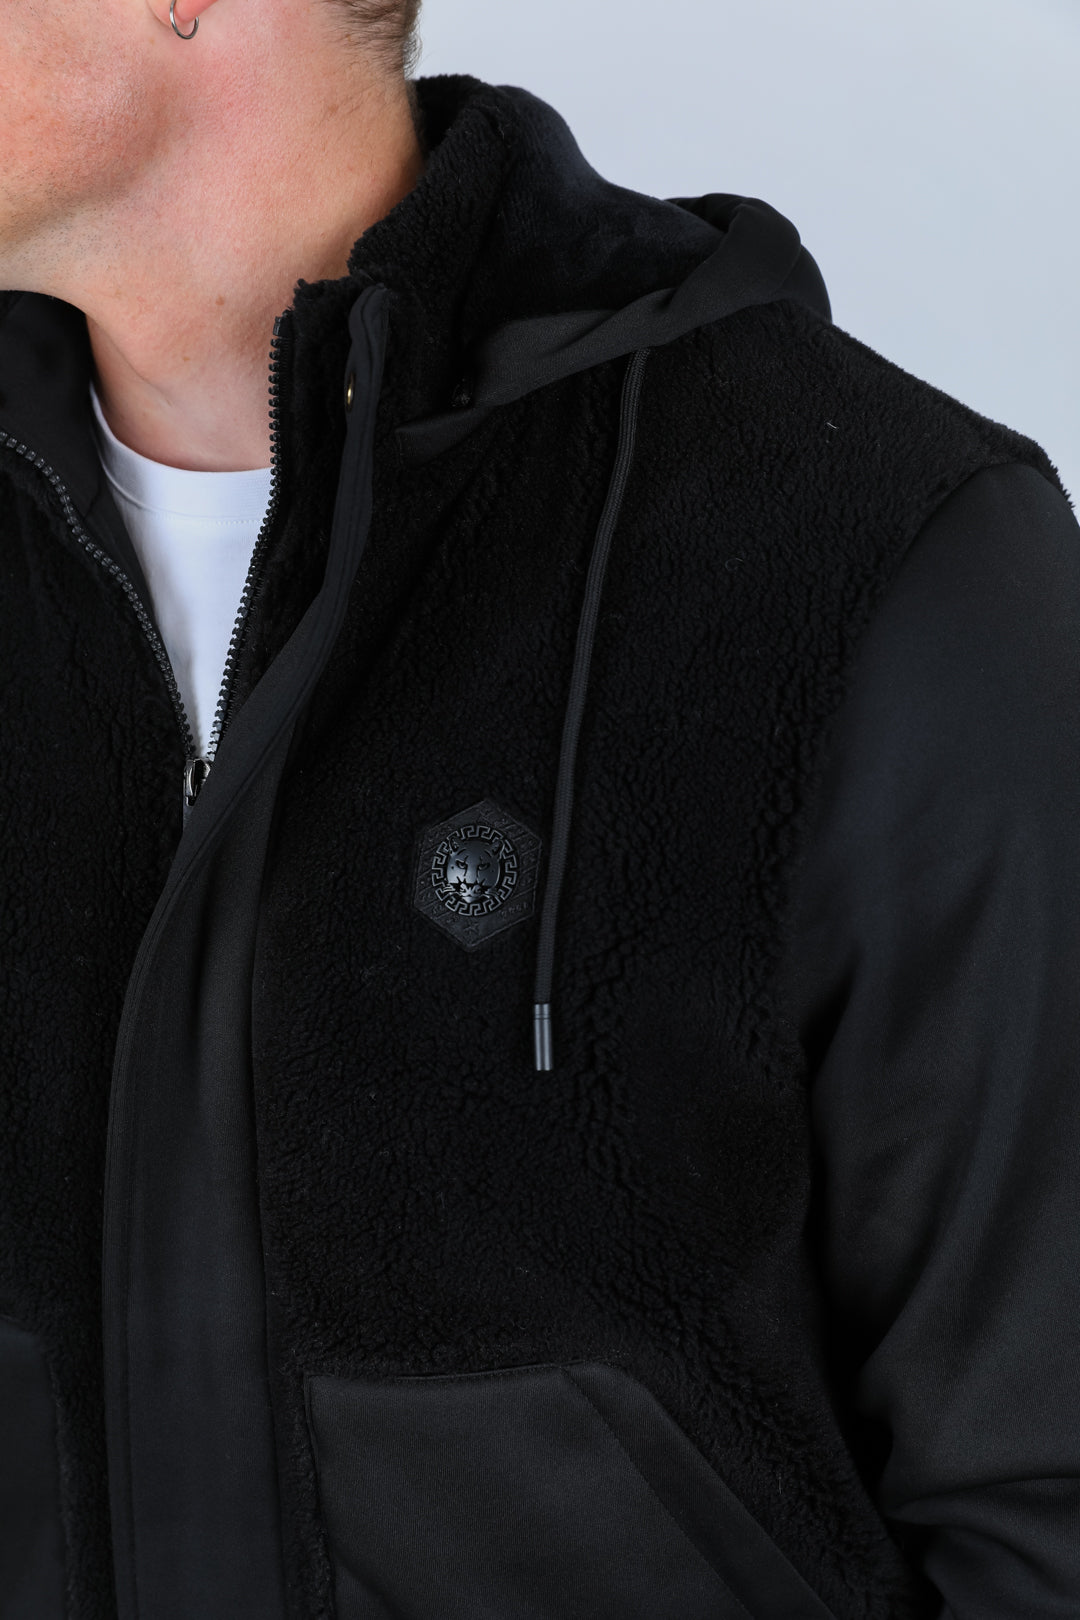 Mens Fur Lined Sherpa Hooded Jacket - Black